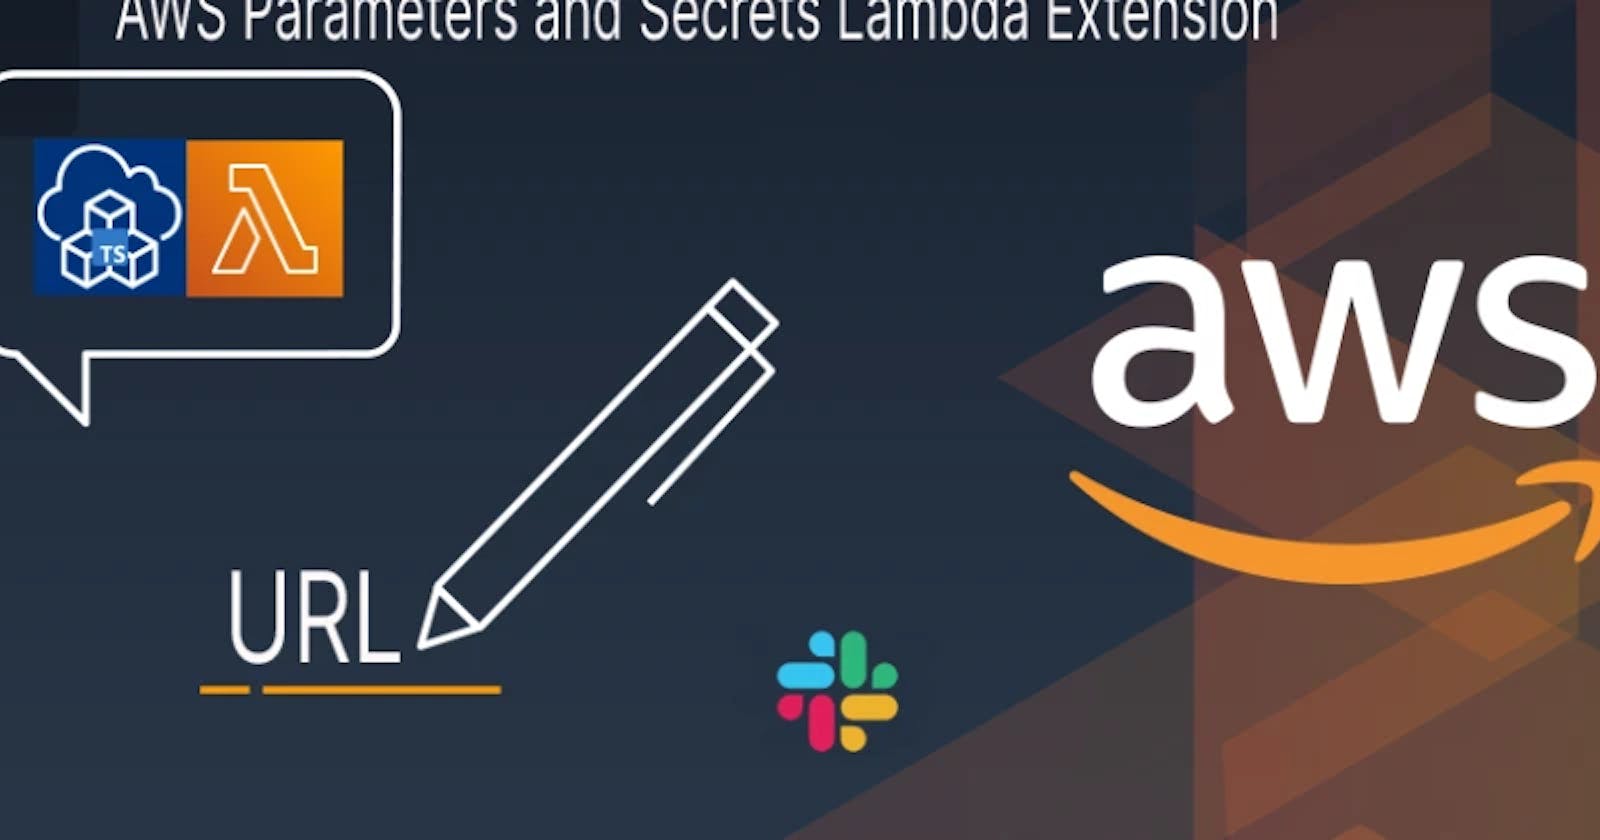 AWS Parameters and Secrets Lambda Extension Demo Using AWS CDK